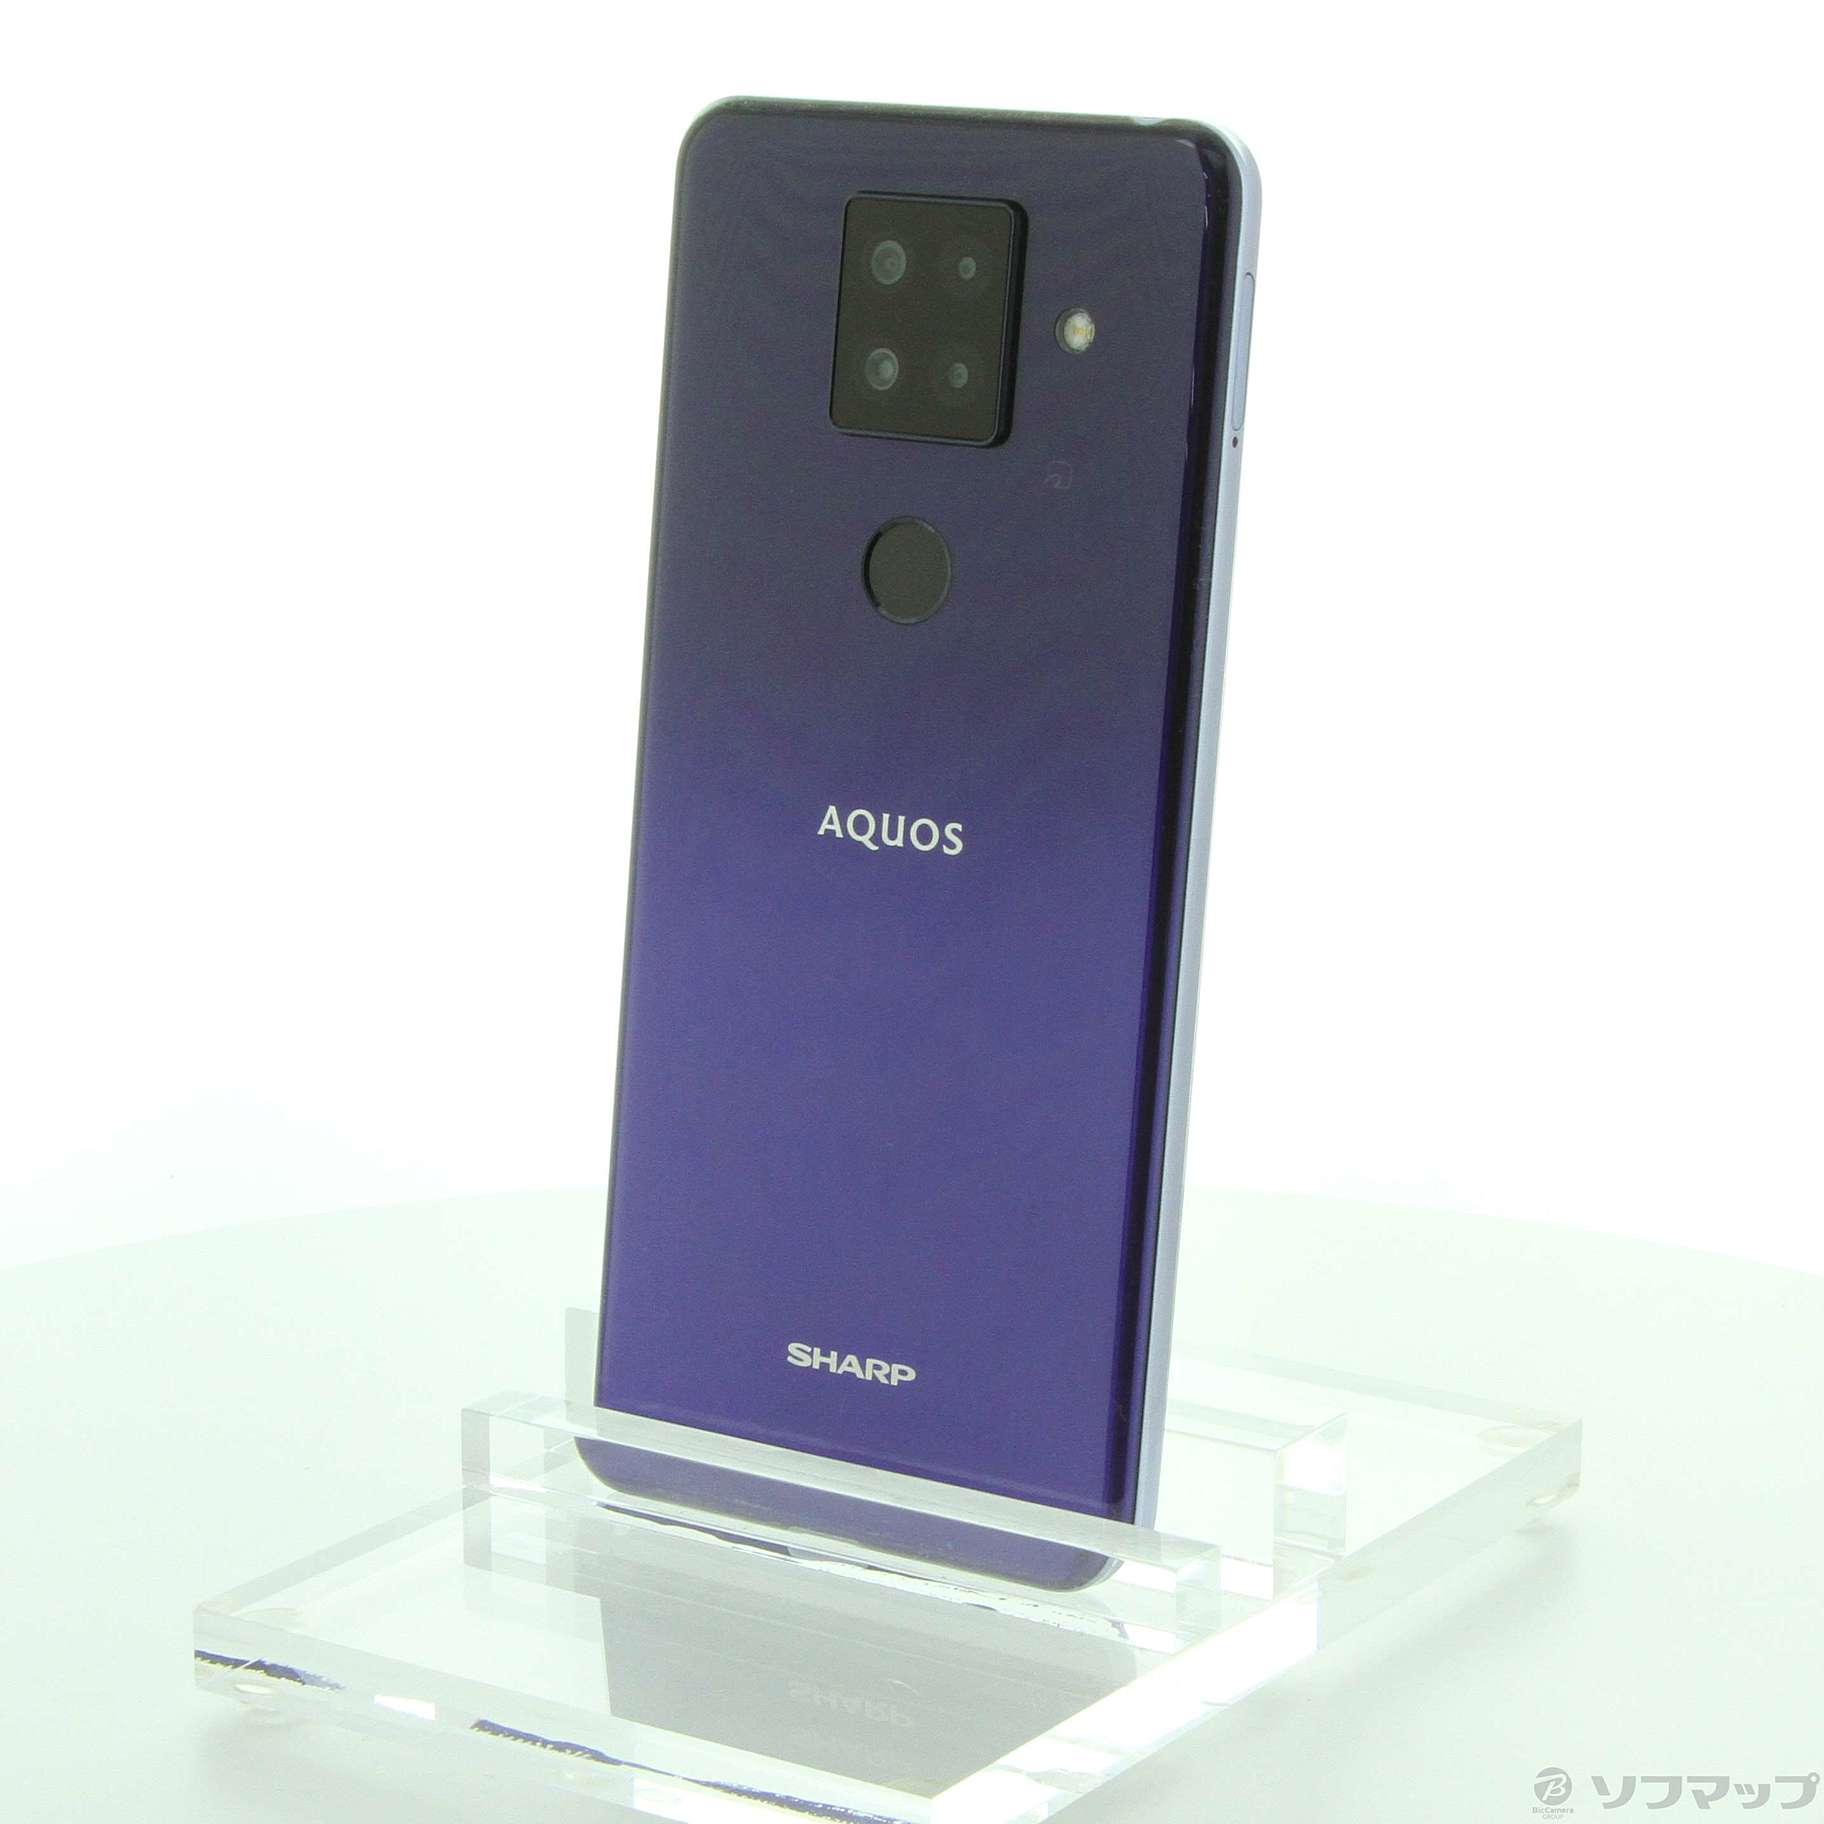 AQUOS スマホ 値下げ - スマートフォン/携帯電話